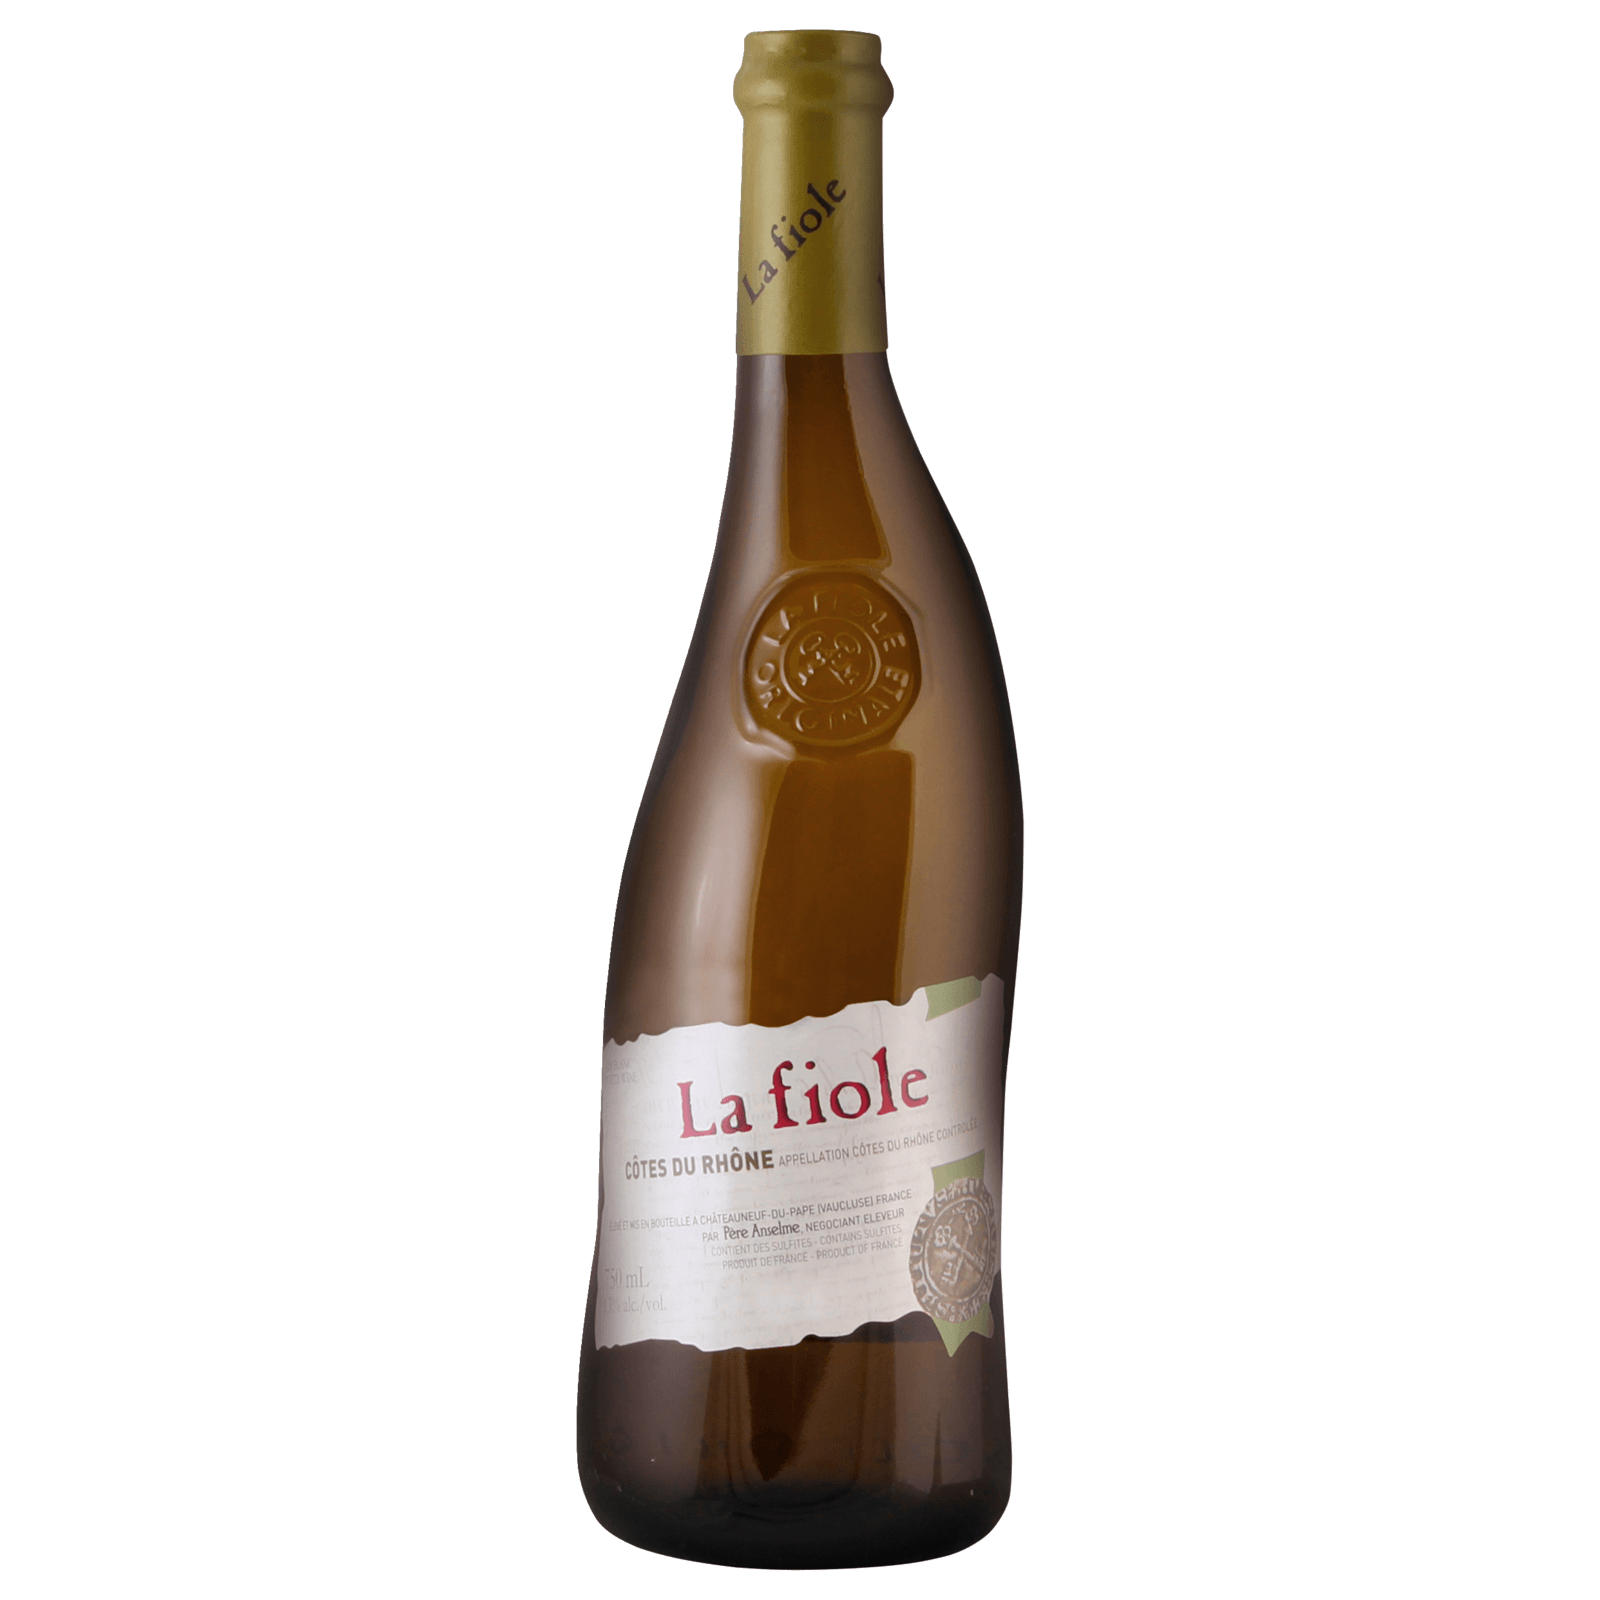 La fiole Weißwein Cotes du Rhone trocken 0,75l bei REWE online bestellen!